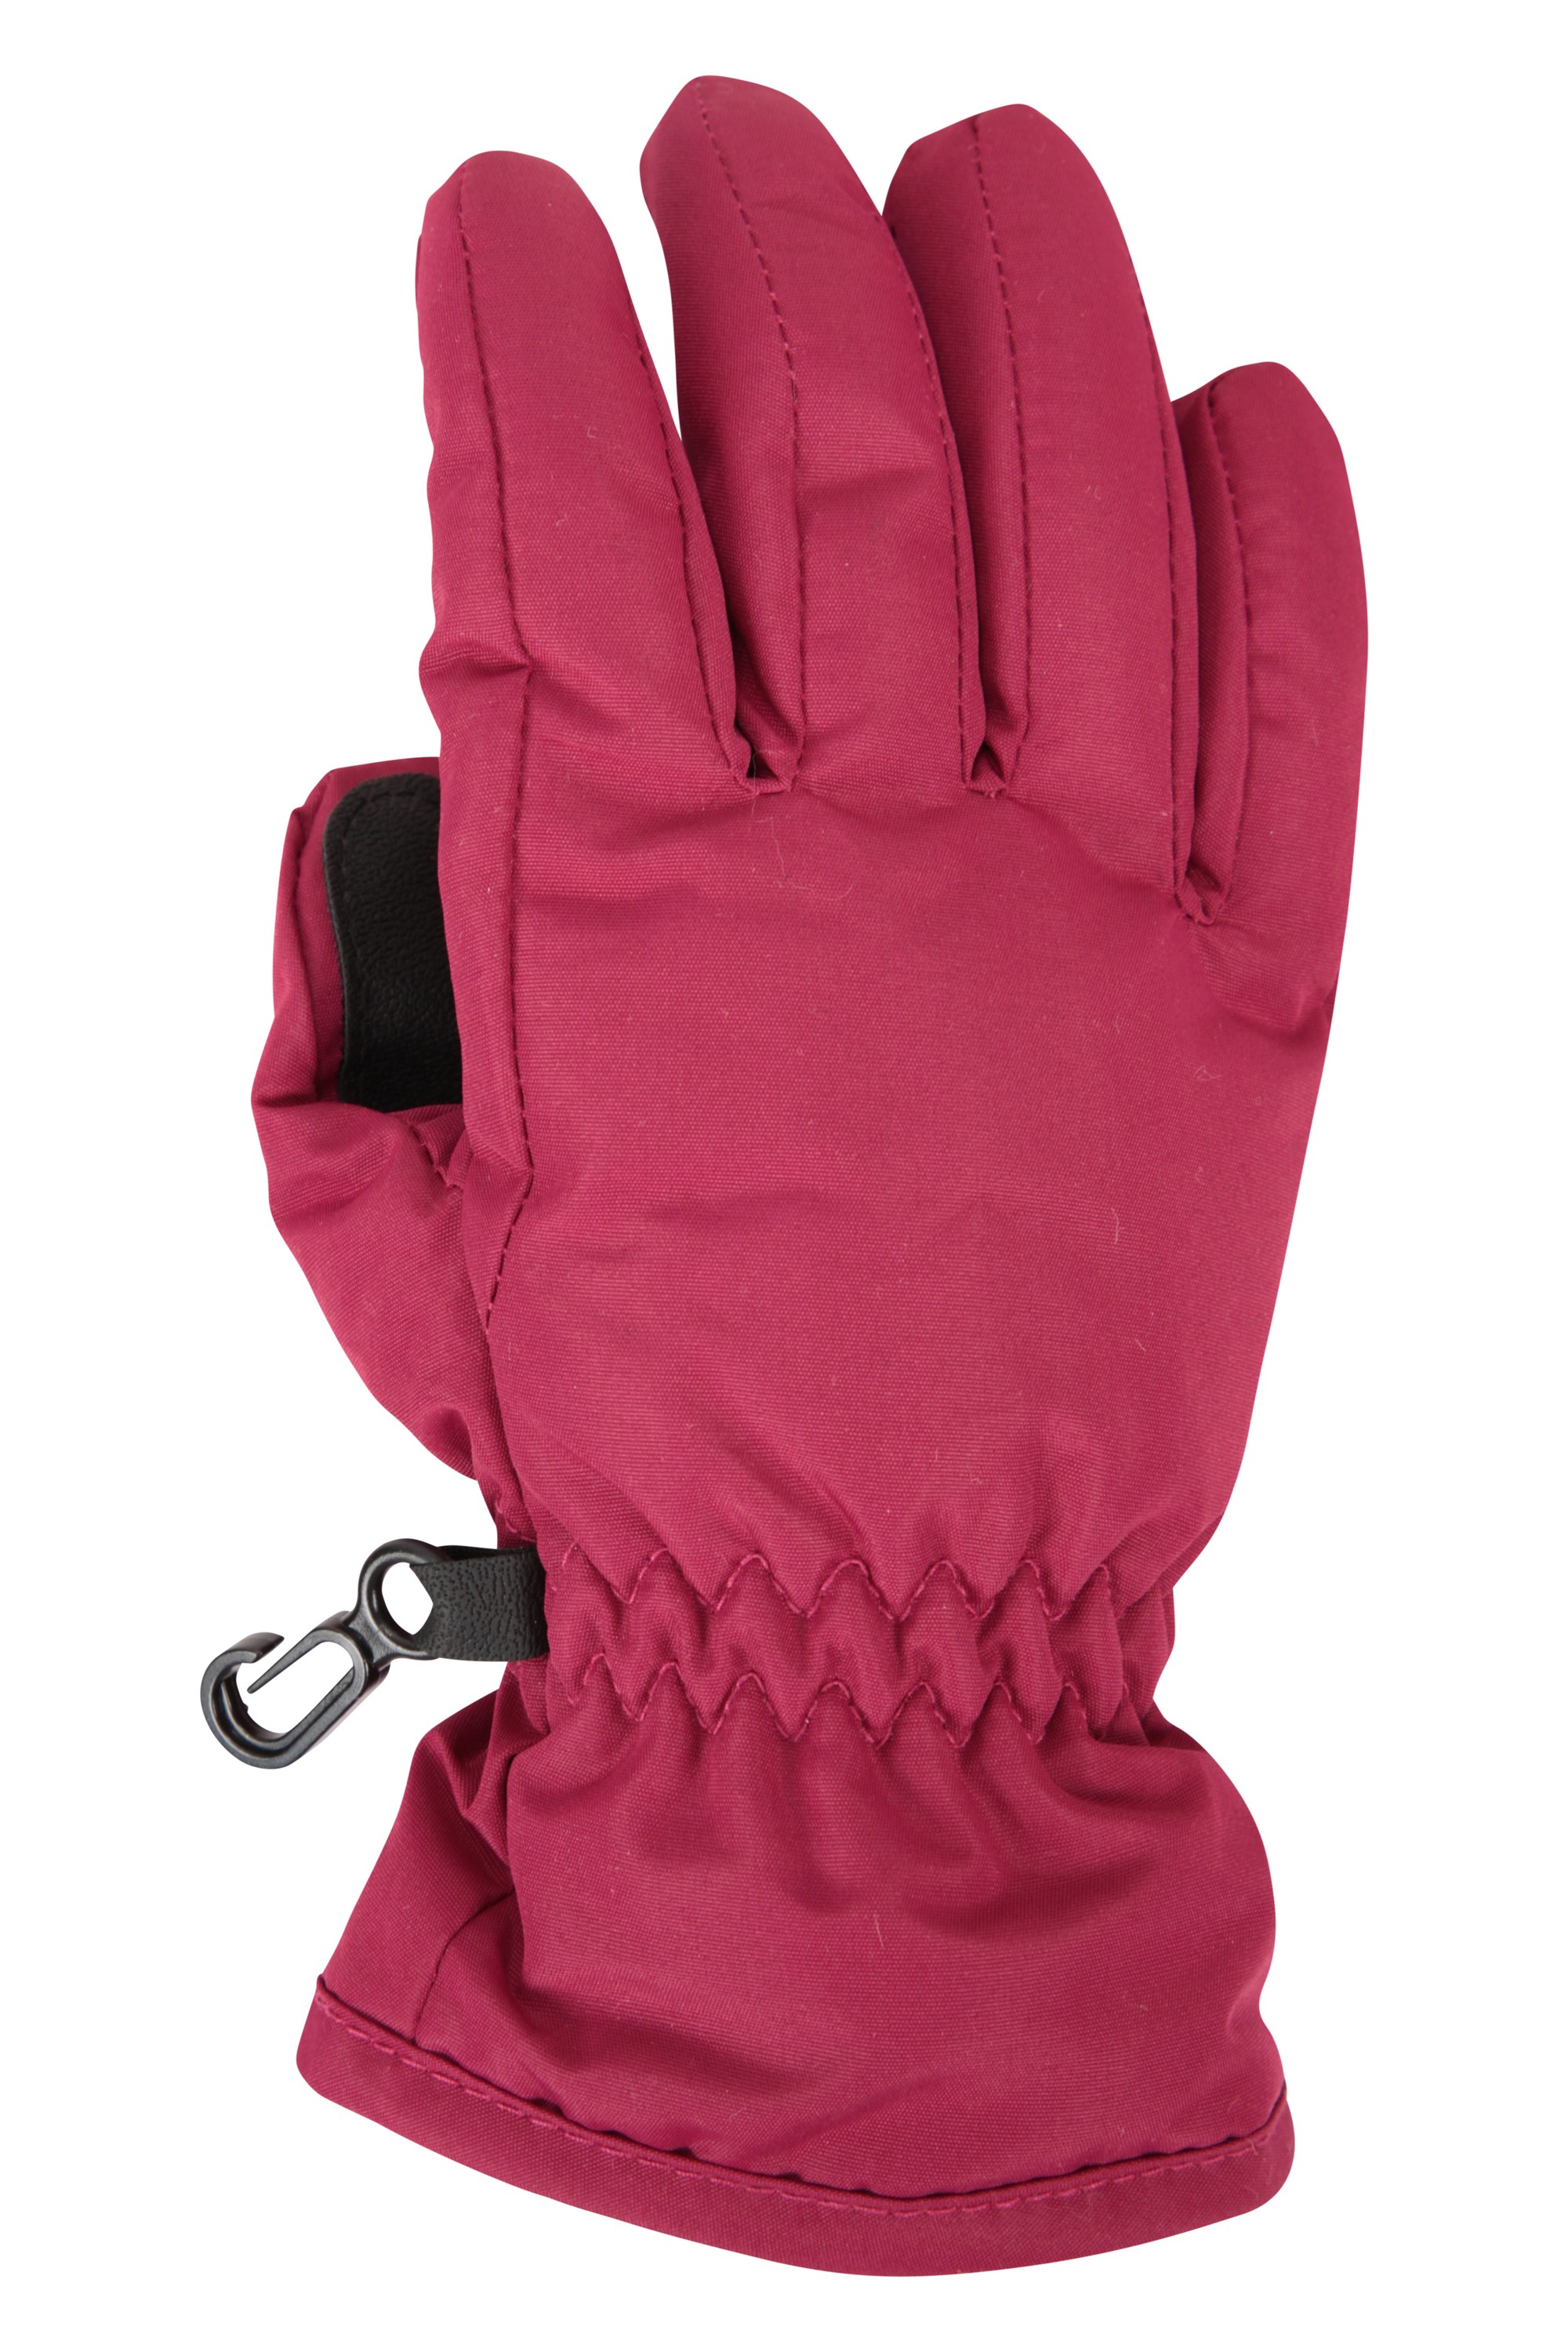 NEW Mountain Warehouse Kids' Pink Snowproof Ski Gloves Medium M RRP £16.99 Child 